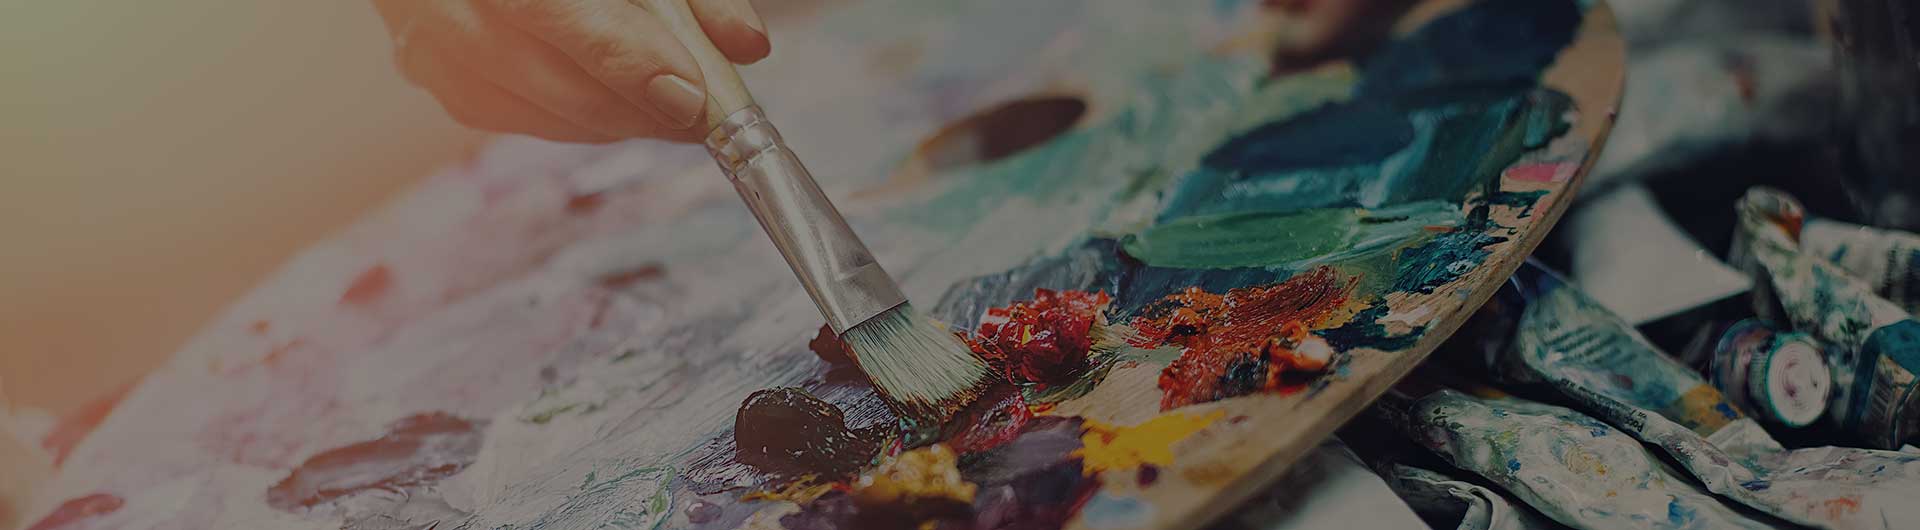 Artist using a paint palette.